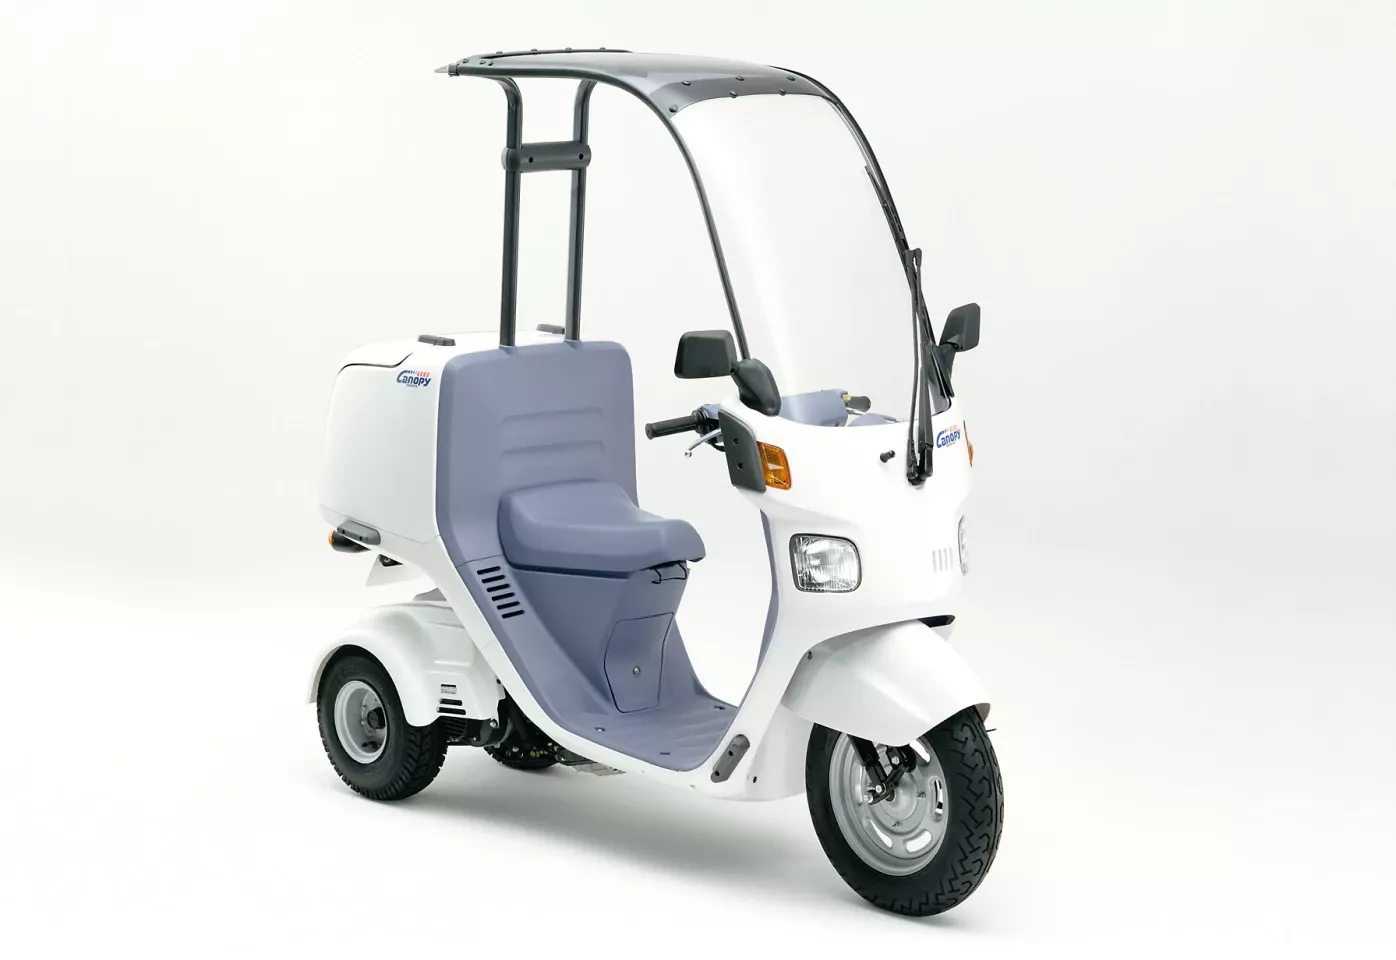 Yamaha announces narrow, light and very affordable Tricity tilting 3-wheeler